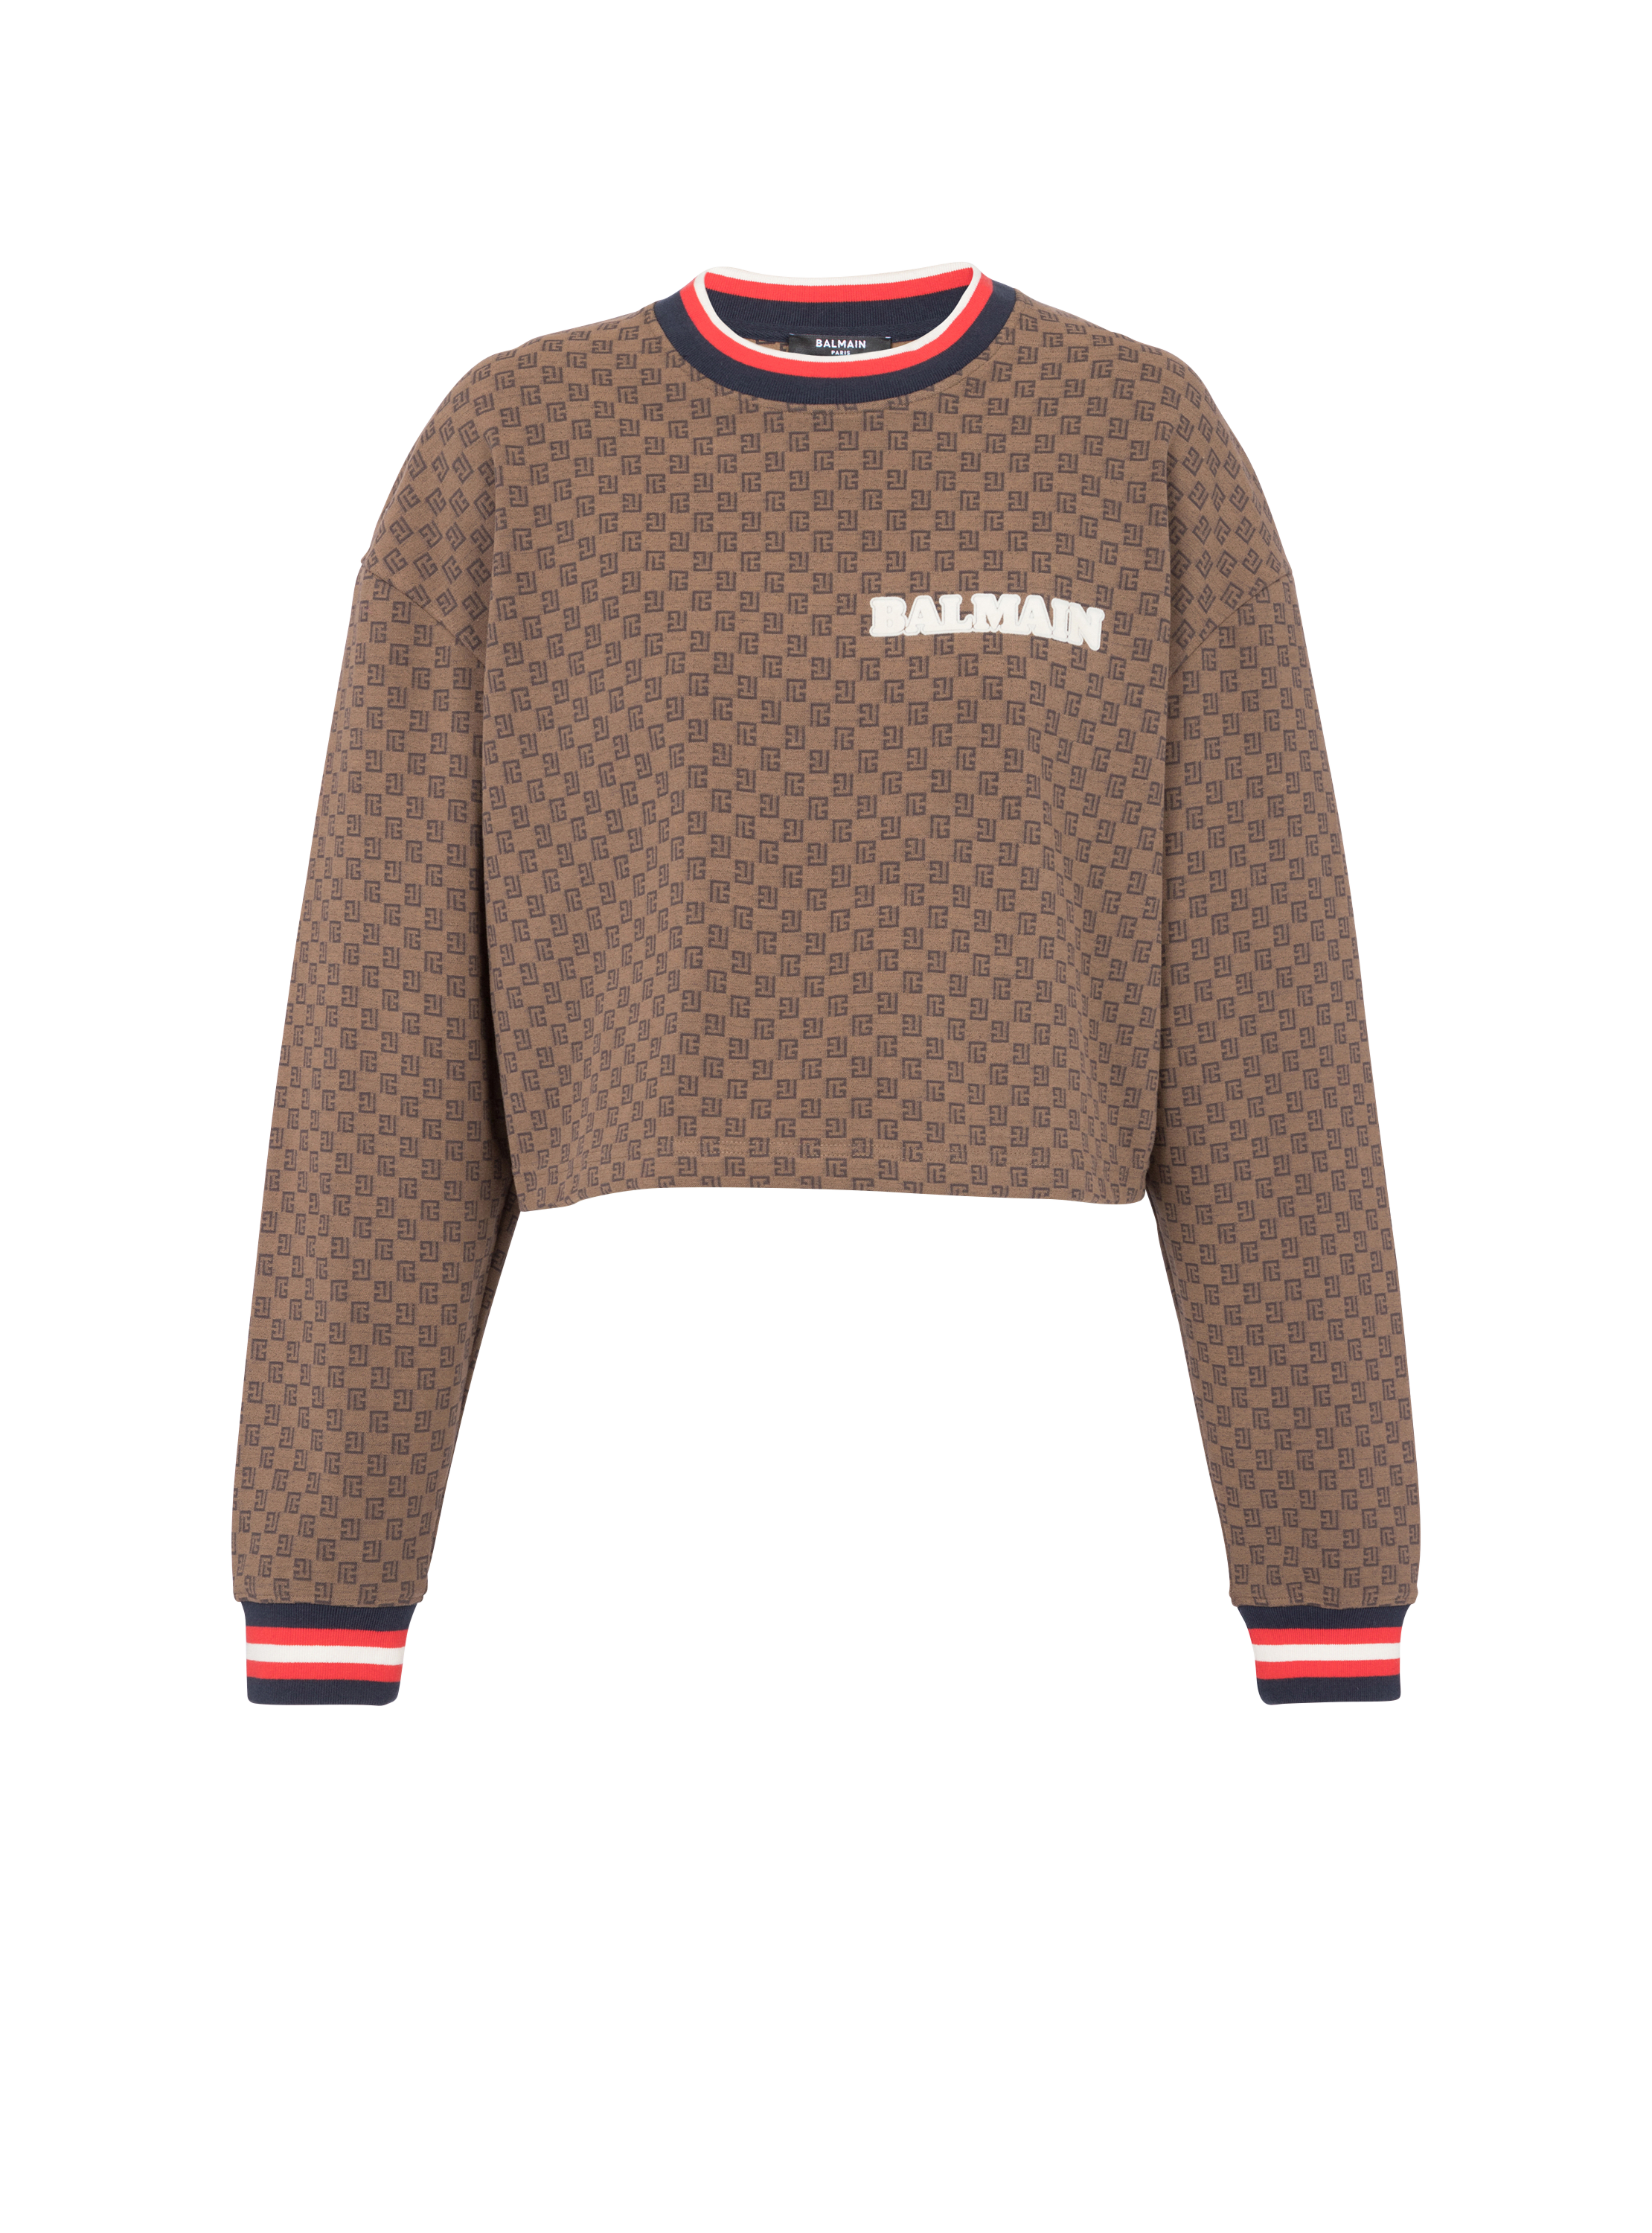 Kurzes Sweatshirt mit Mini-Monogramm, braun, hi-res